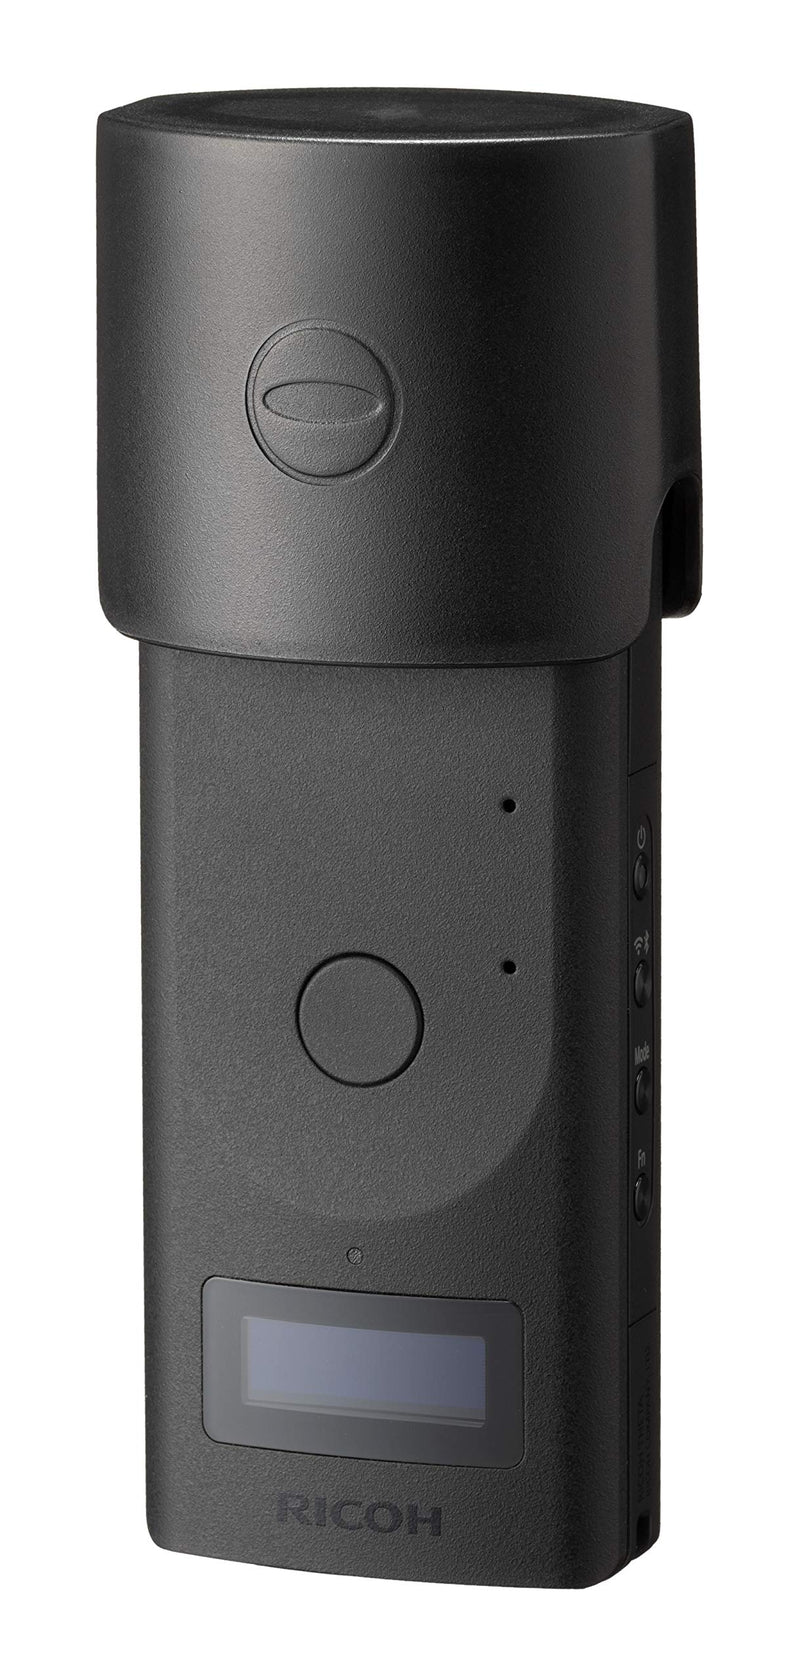 Lens Cap TL-2 for Theta Z1 Dual 1" Sensor Spherical Digital Camera